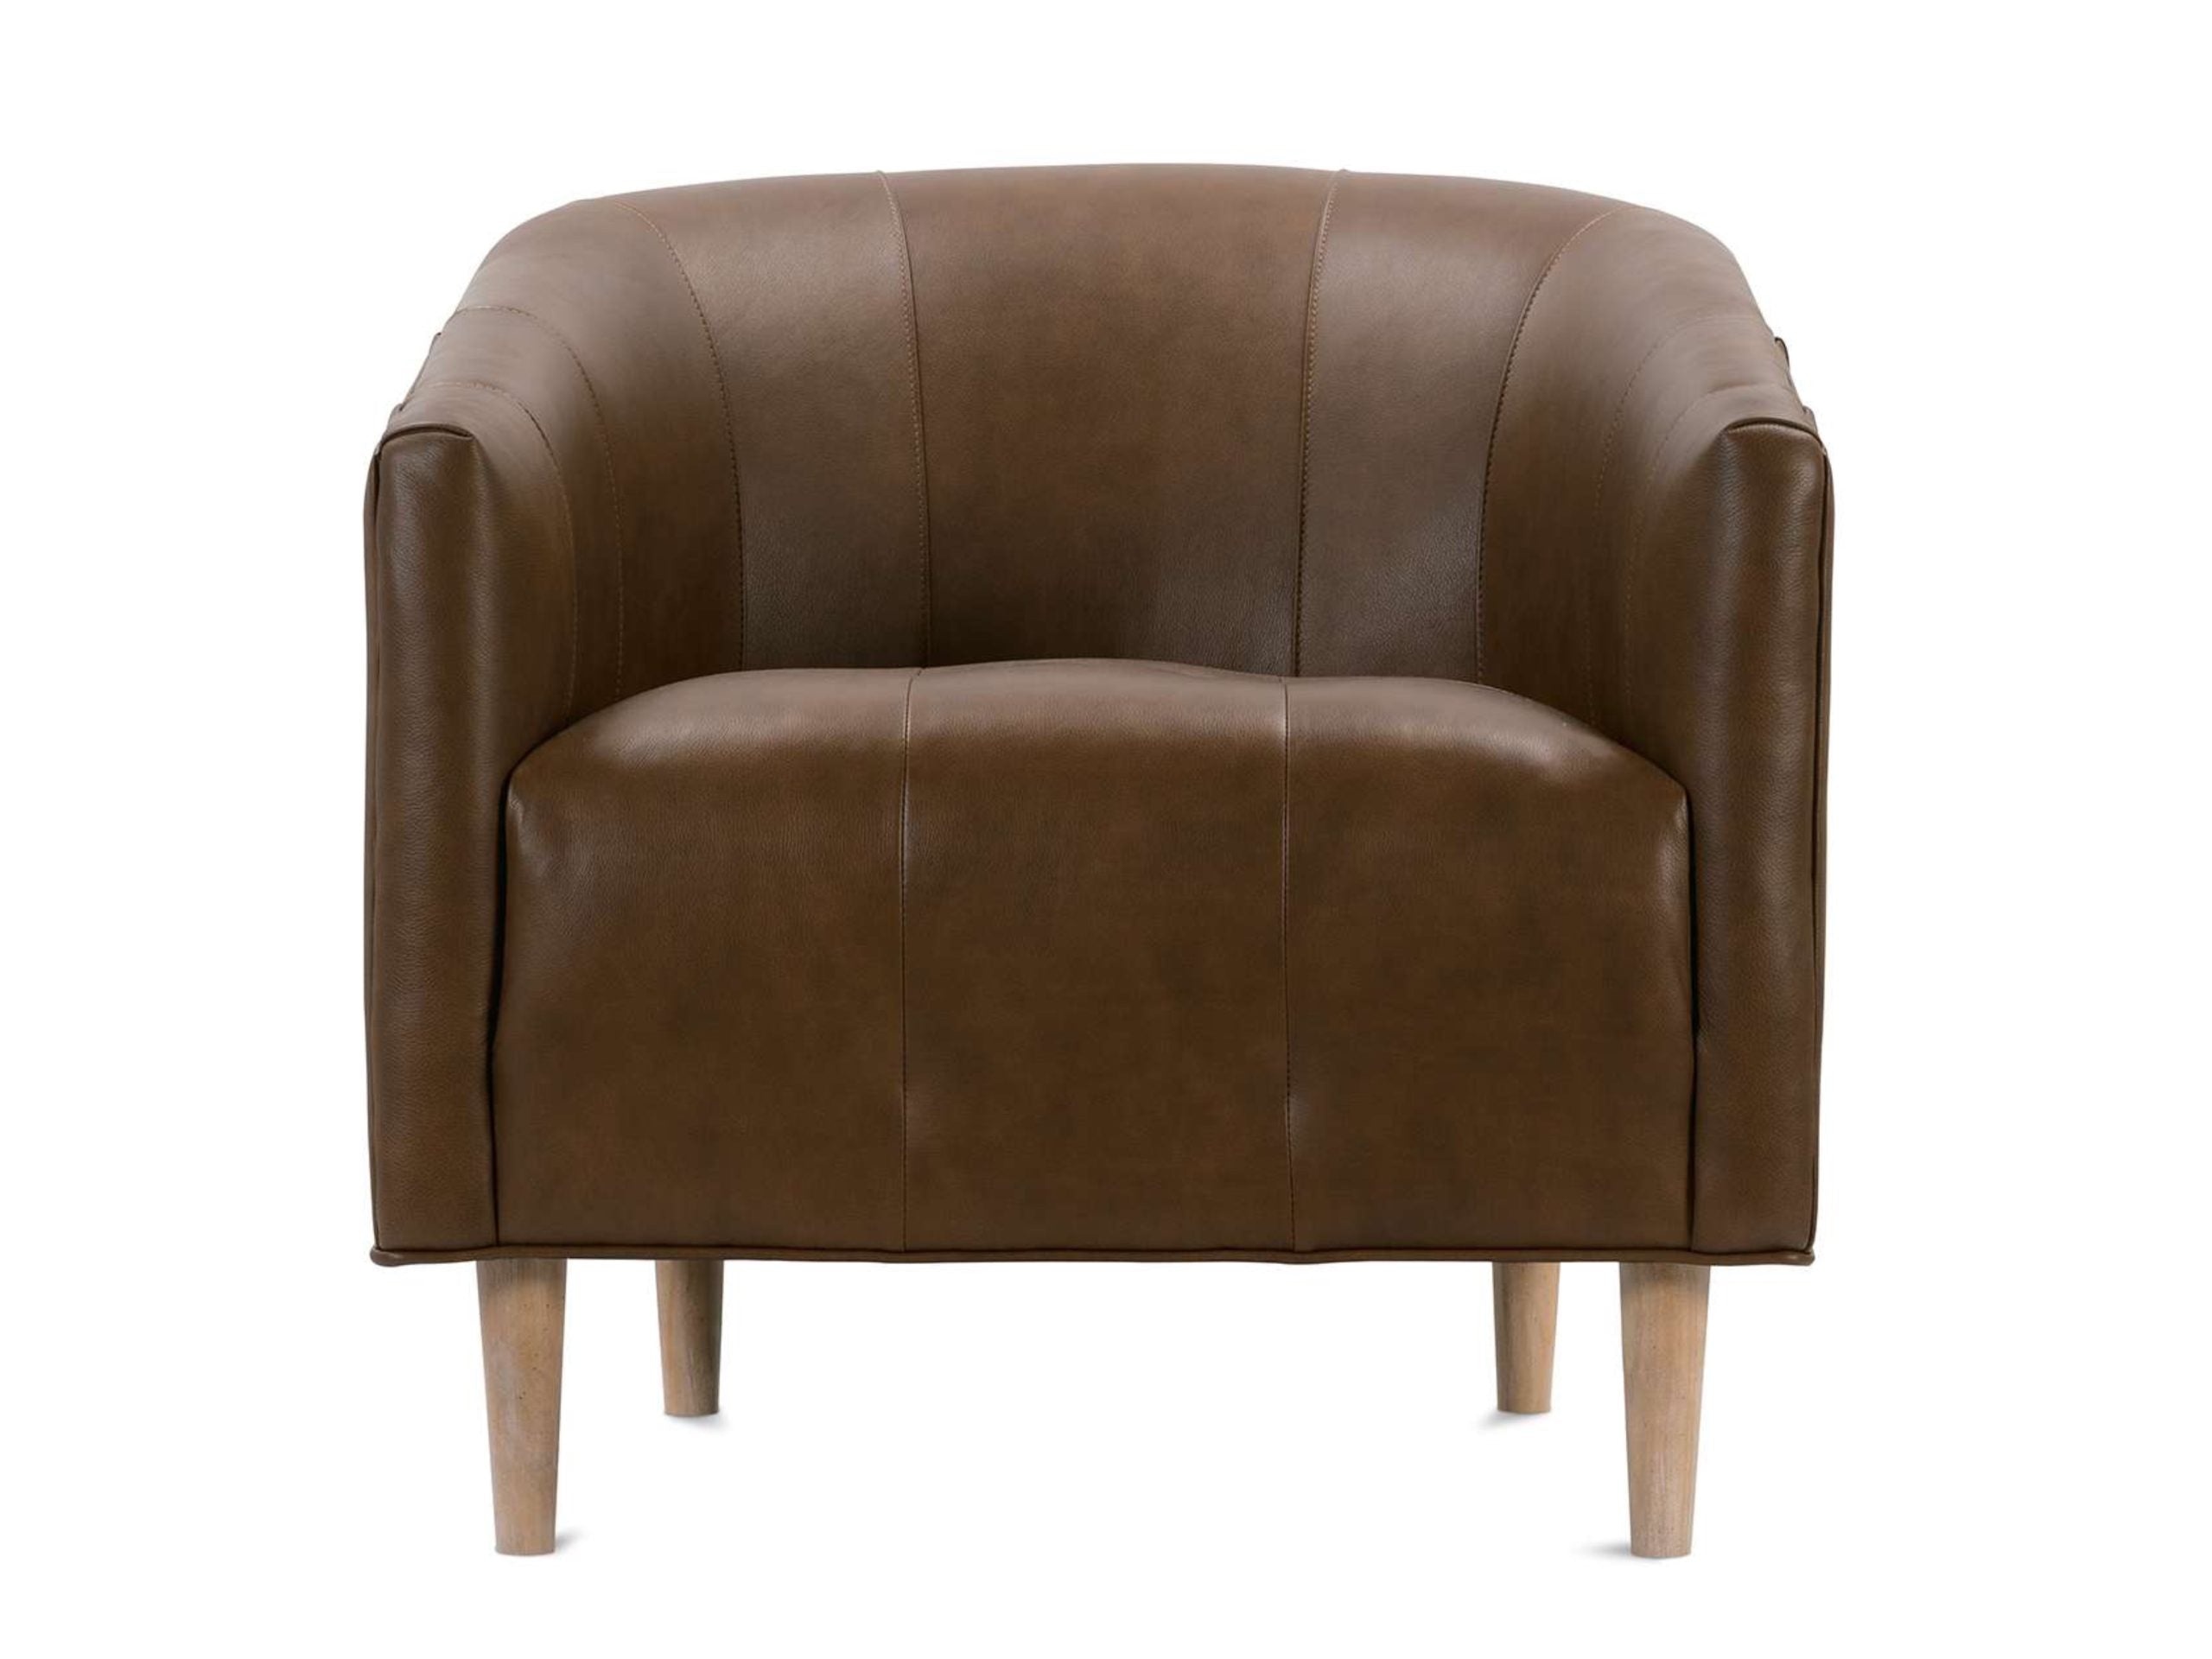 Pate Leather chair - Hedi's Furniture